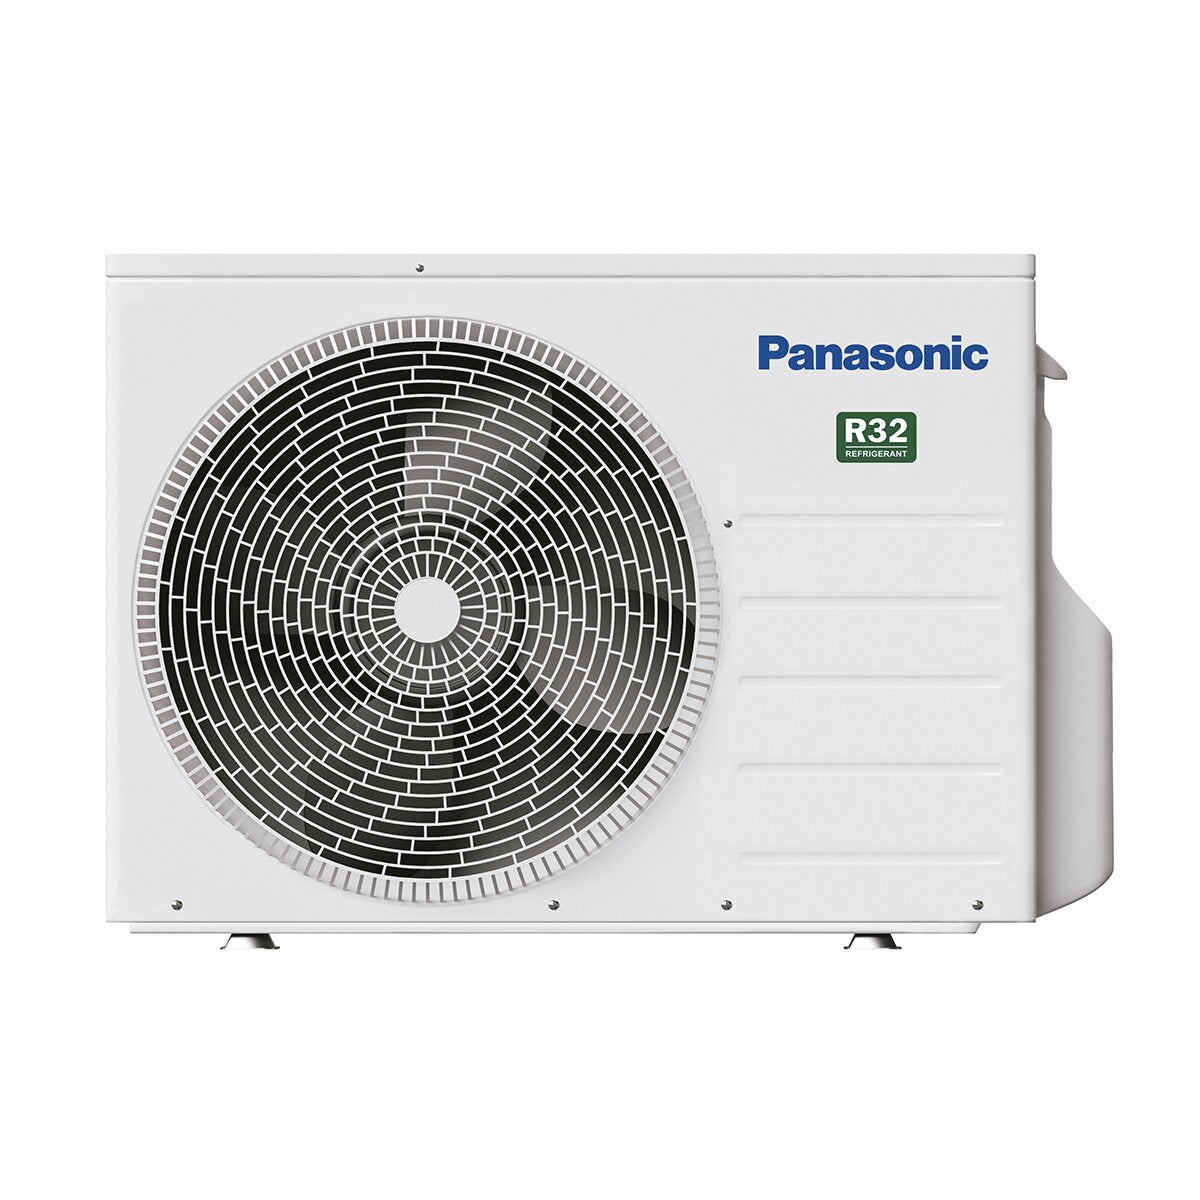 Panasonic TZ Series dual split air conditioner 7000+9000 BTU A+++ wifi external unit 4.1kW